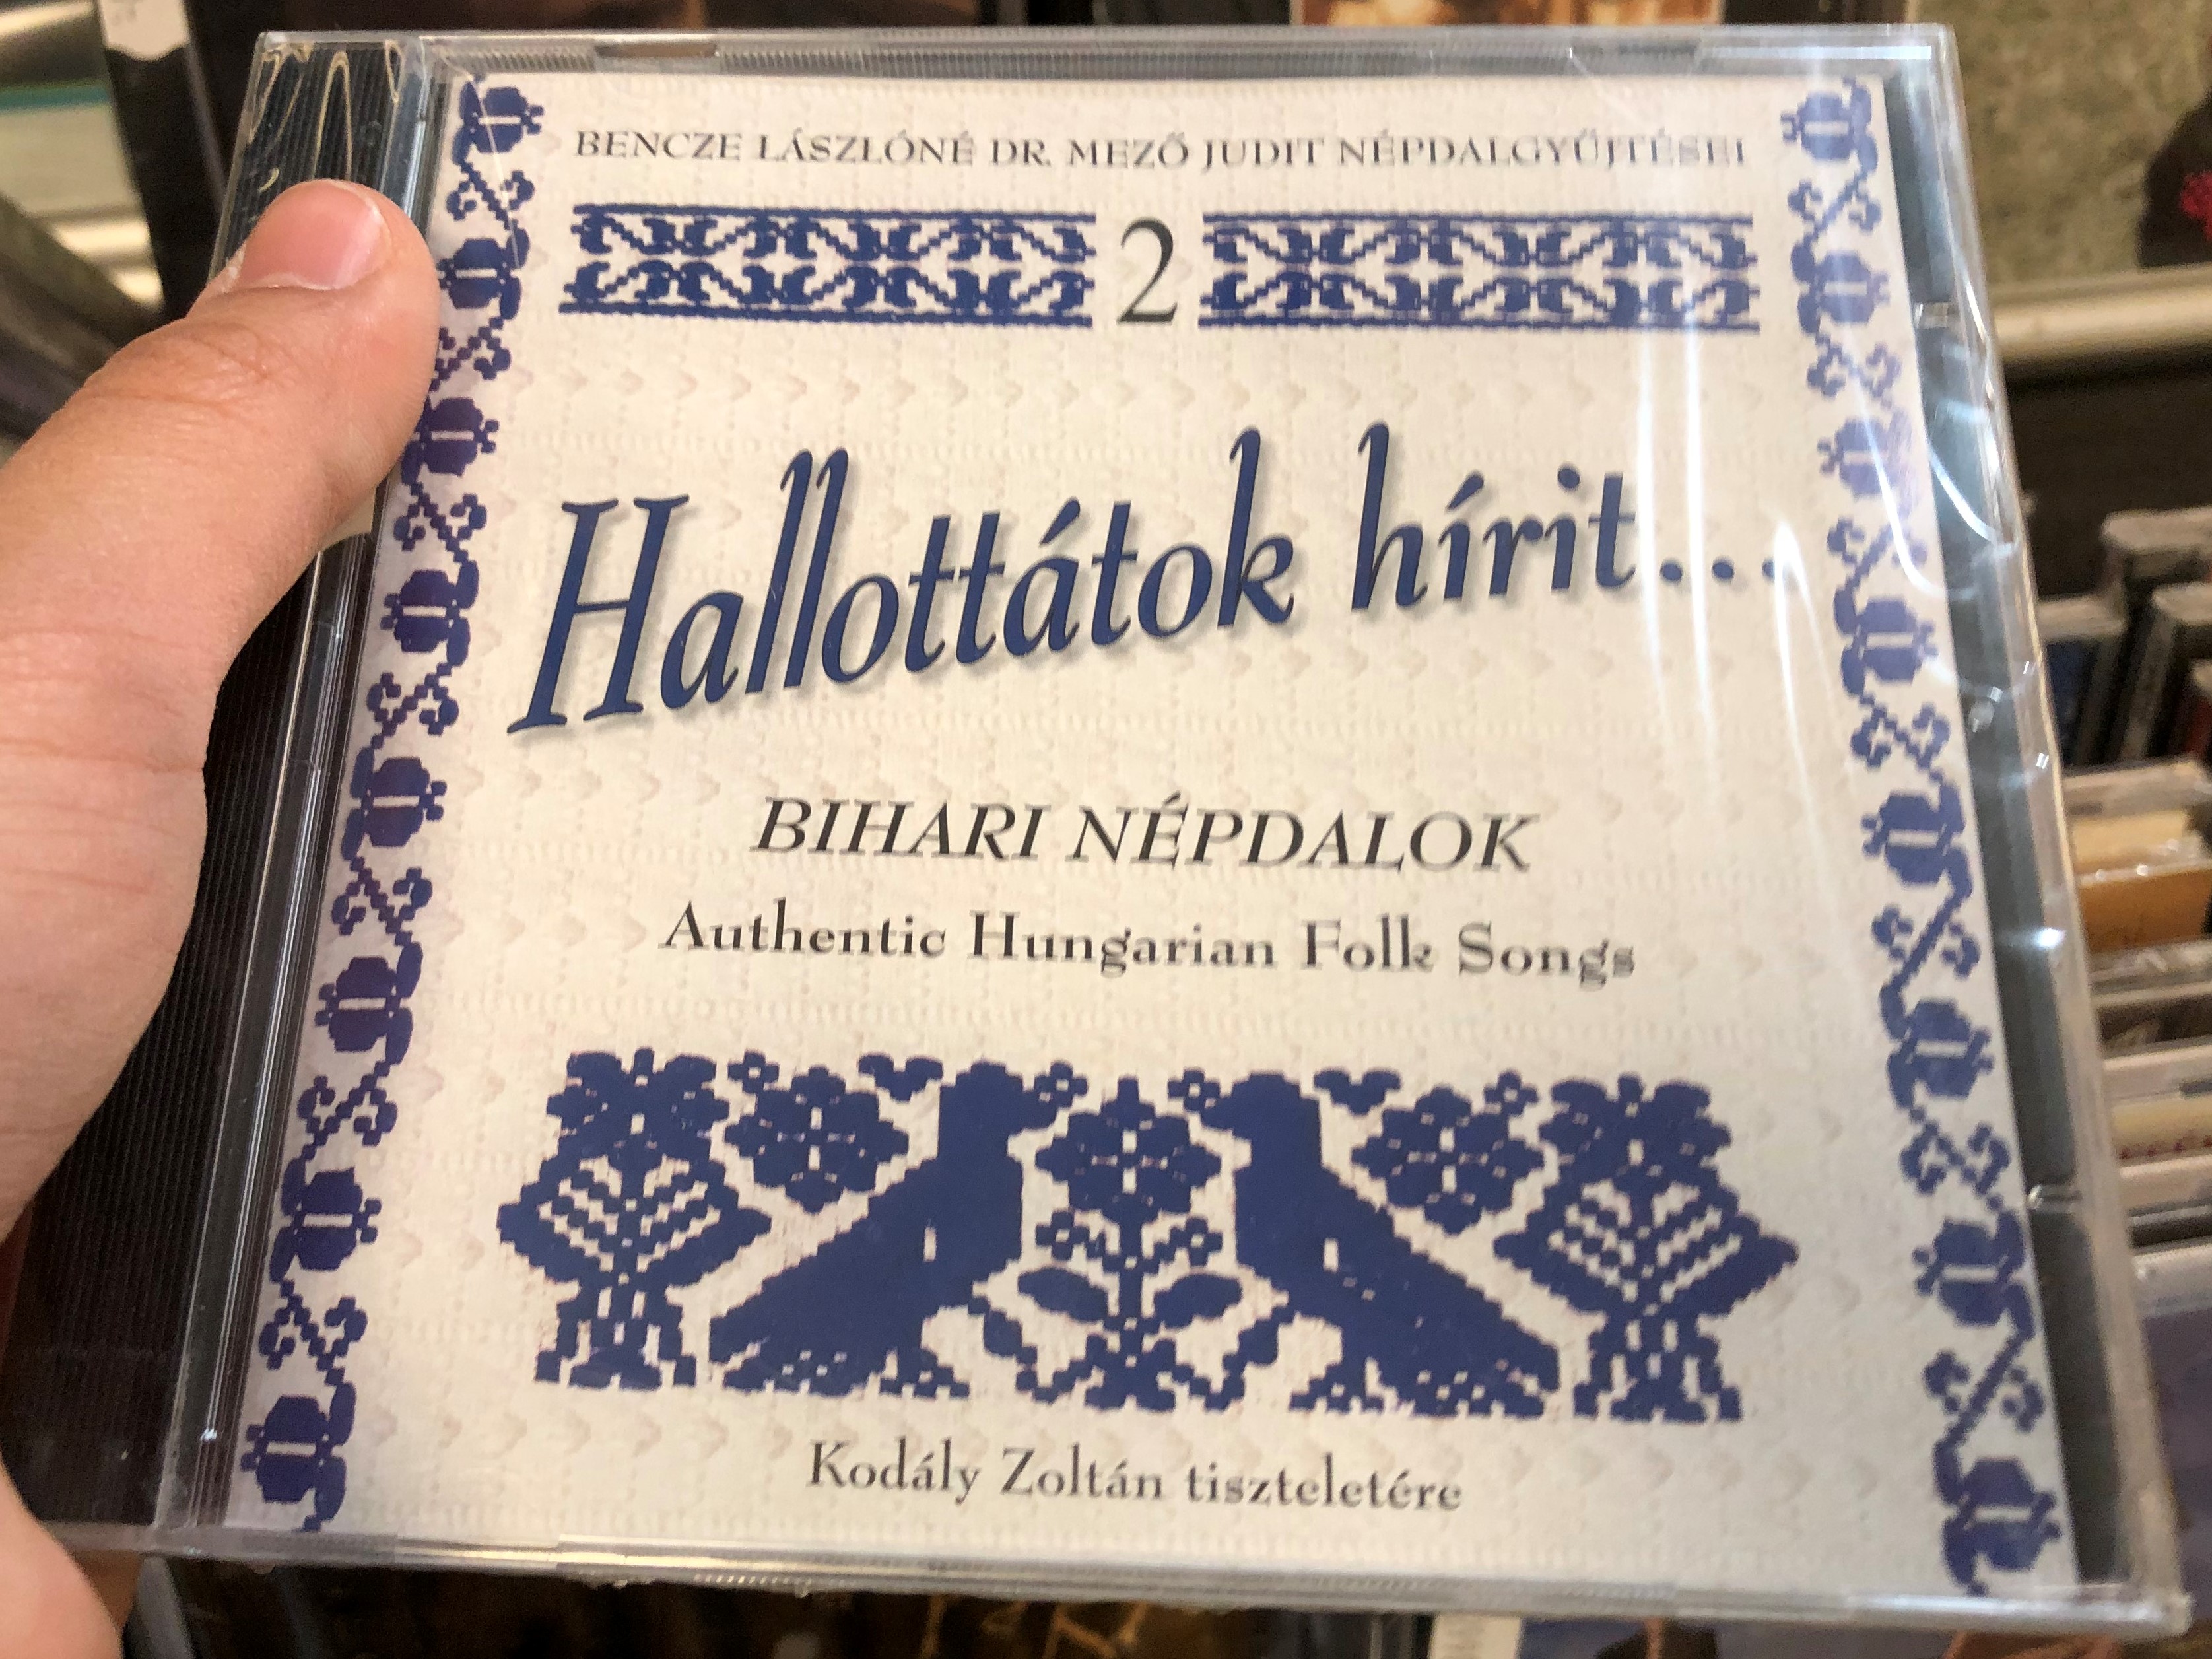 bencze-l-szl-n-dr.-mez-judit-hallott-tok-h-rit-bihari-n-pdalok-authentic-hungarian-folk-music-kod-ly-zolt-n-tisztelet-re-dialekton-n-pzenei-kiad-audio-cd-2009-bs-cd-12-1-.jpg